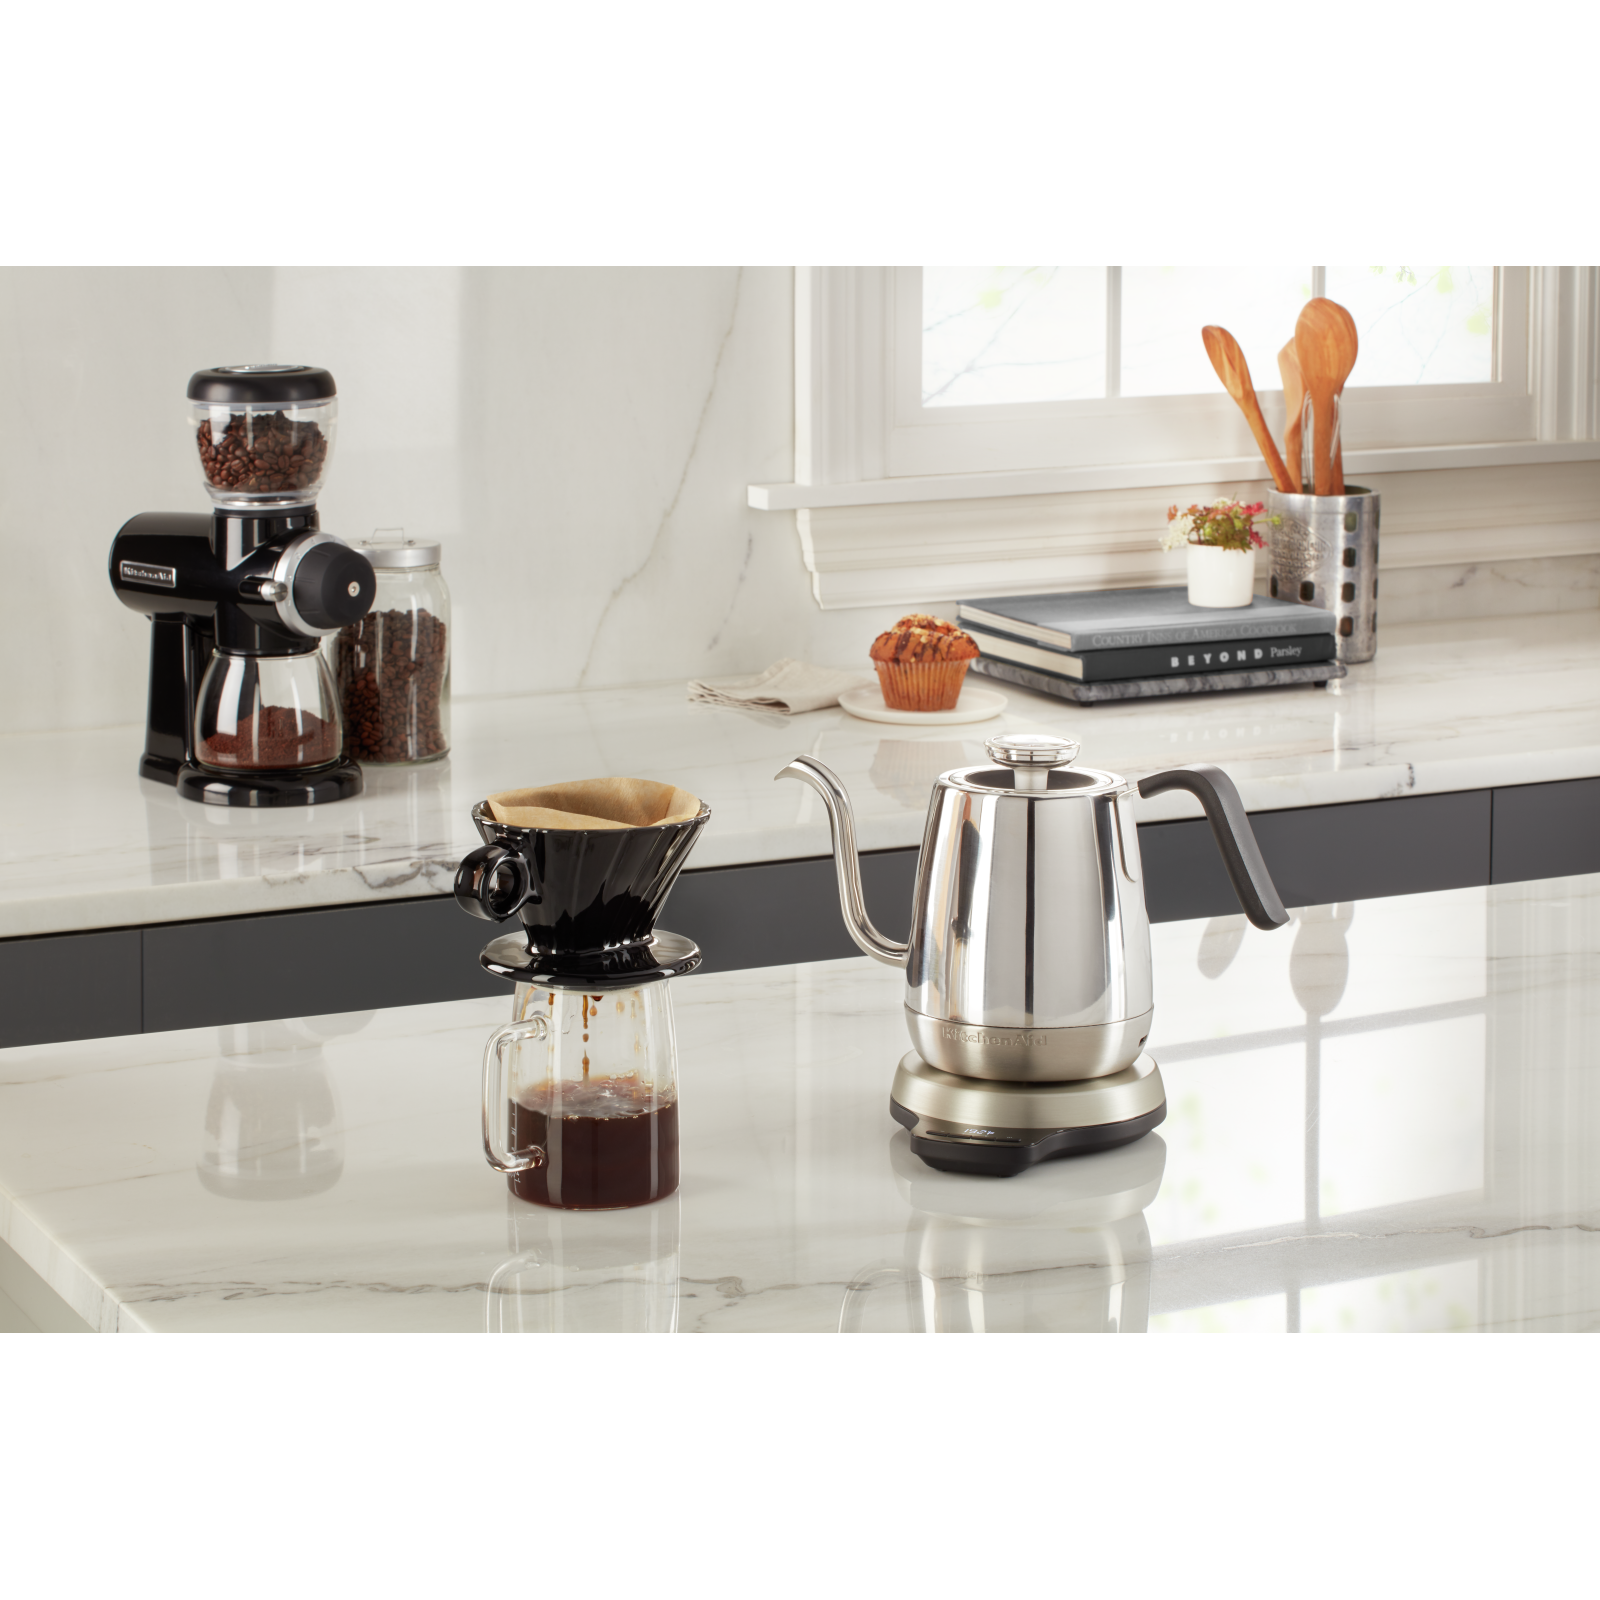 KitchenAid -  Countertop Coffee Grinder in Black - KCG0702OB